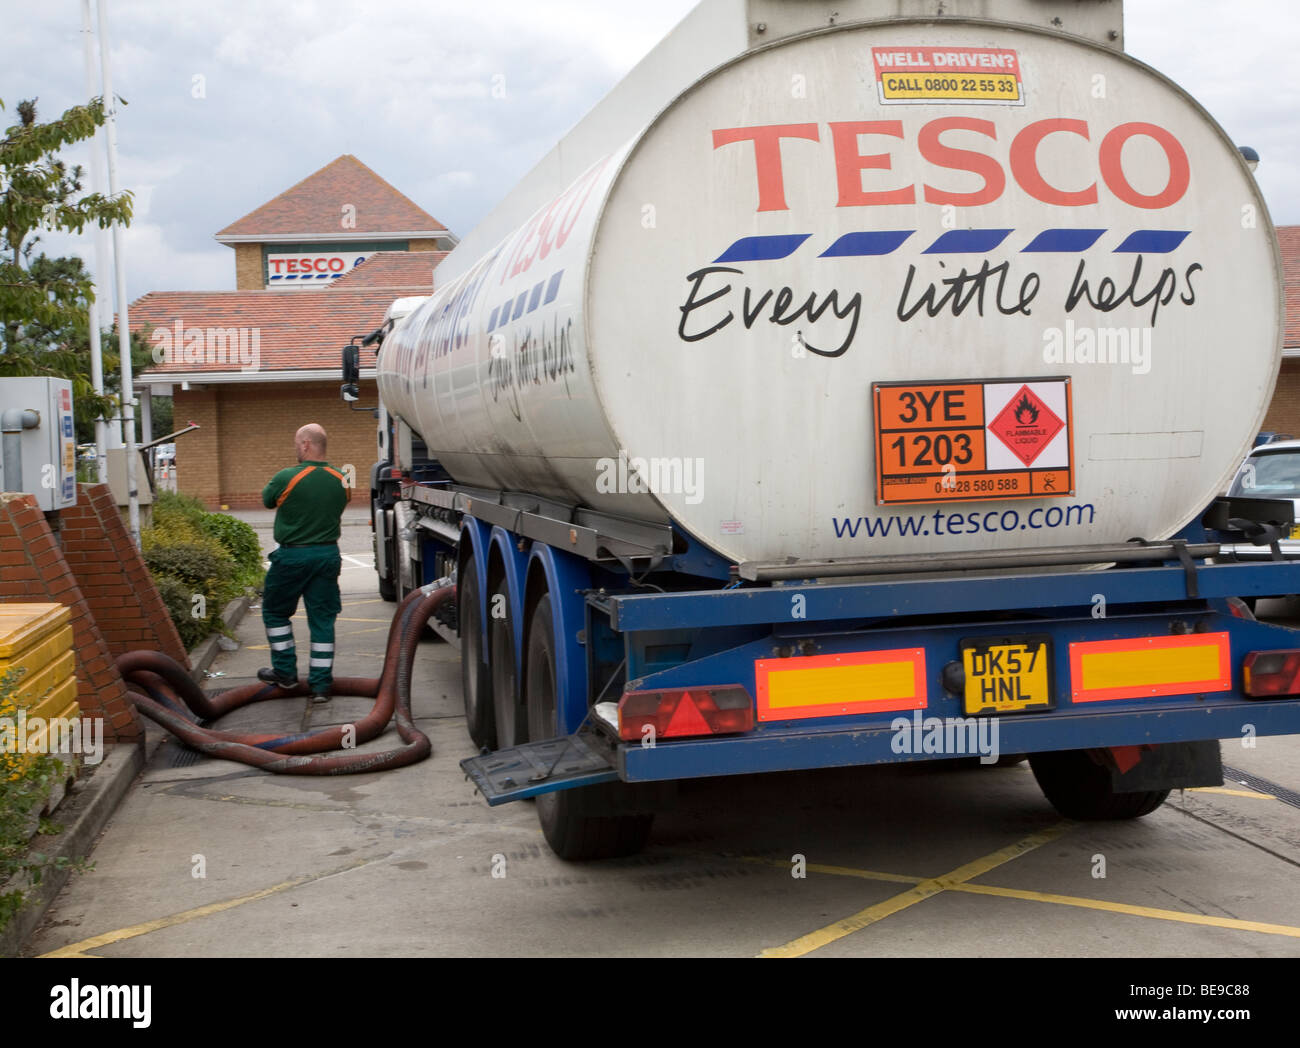 Tesco petrol tanker Stock Photo